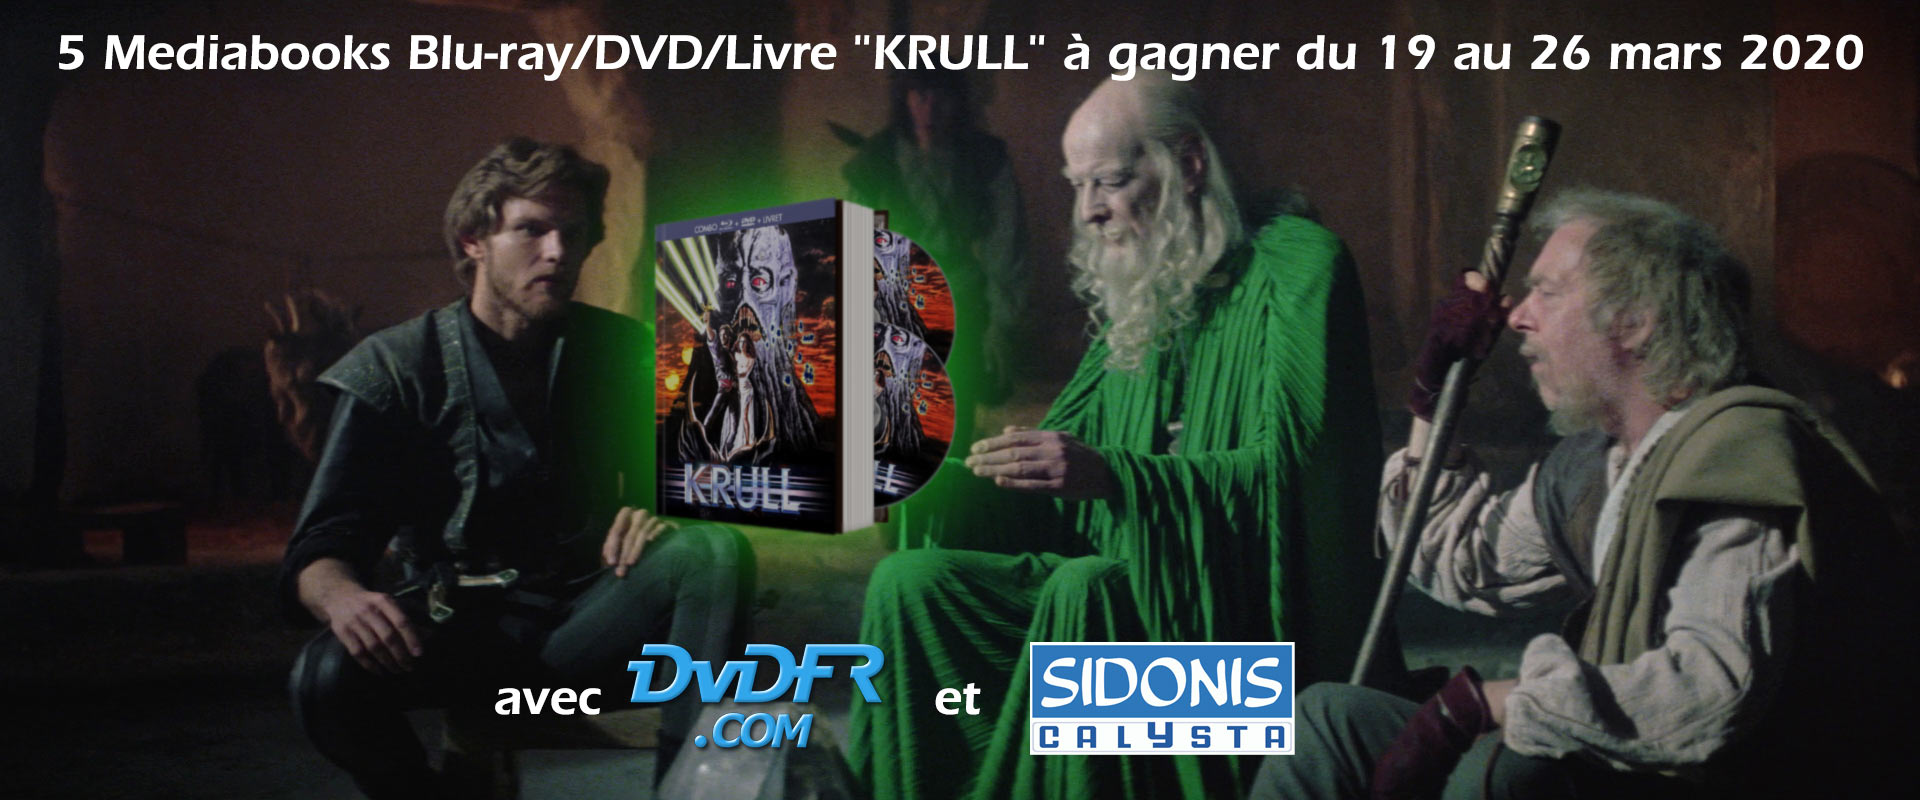 5 exemplaires du MediaBook Blu-ray + DVD + Livret de Krull Concours-Krull